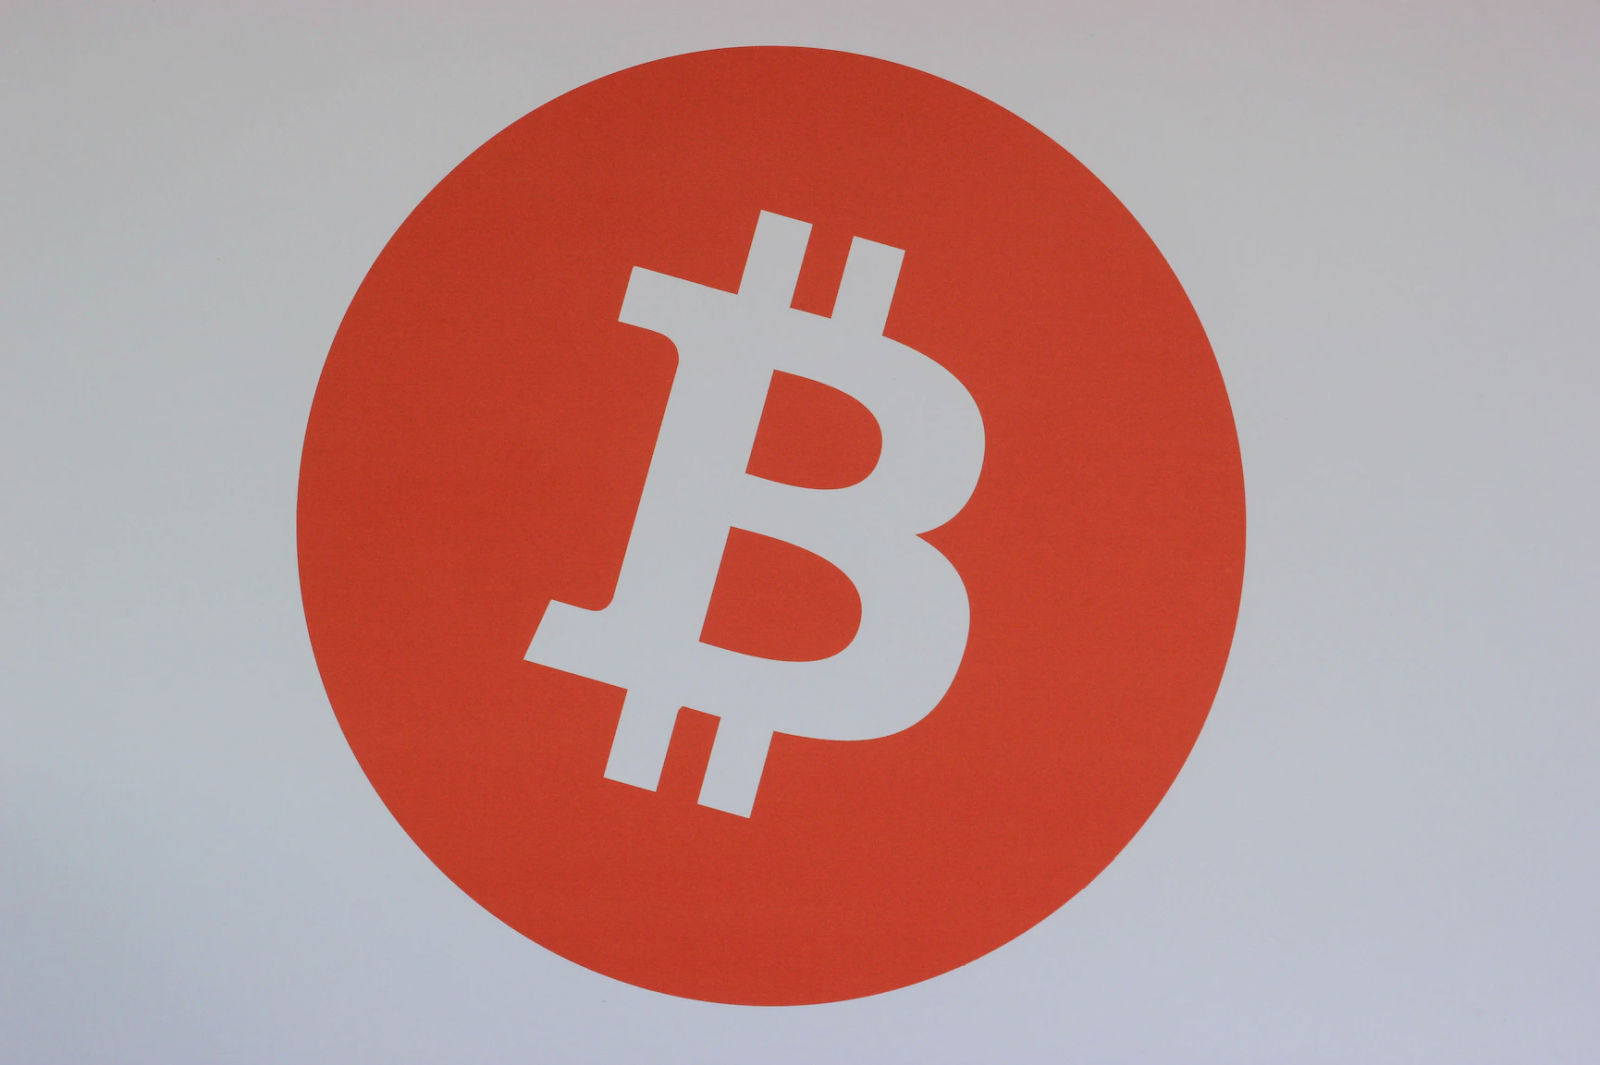 Bitcoin's B logo in a red circle